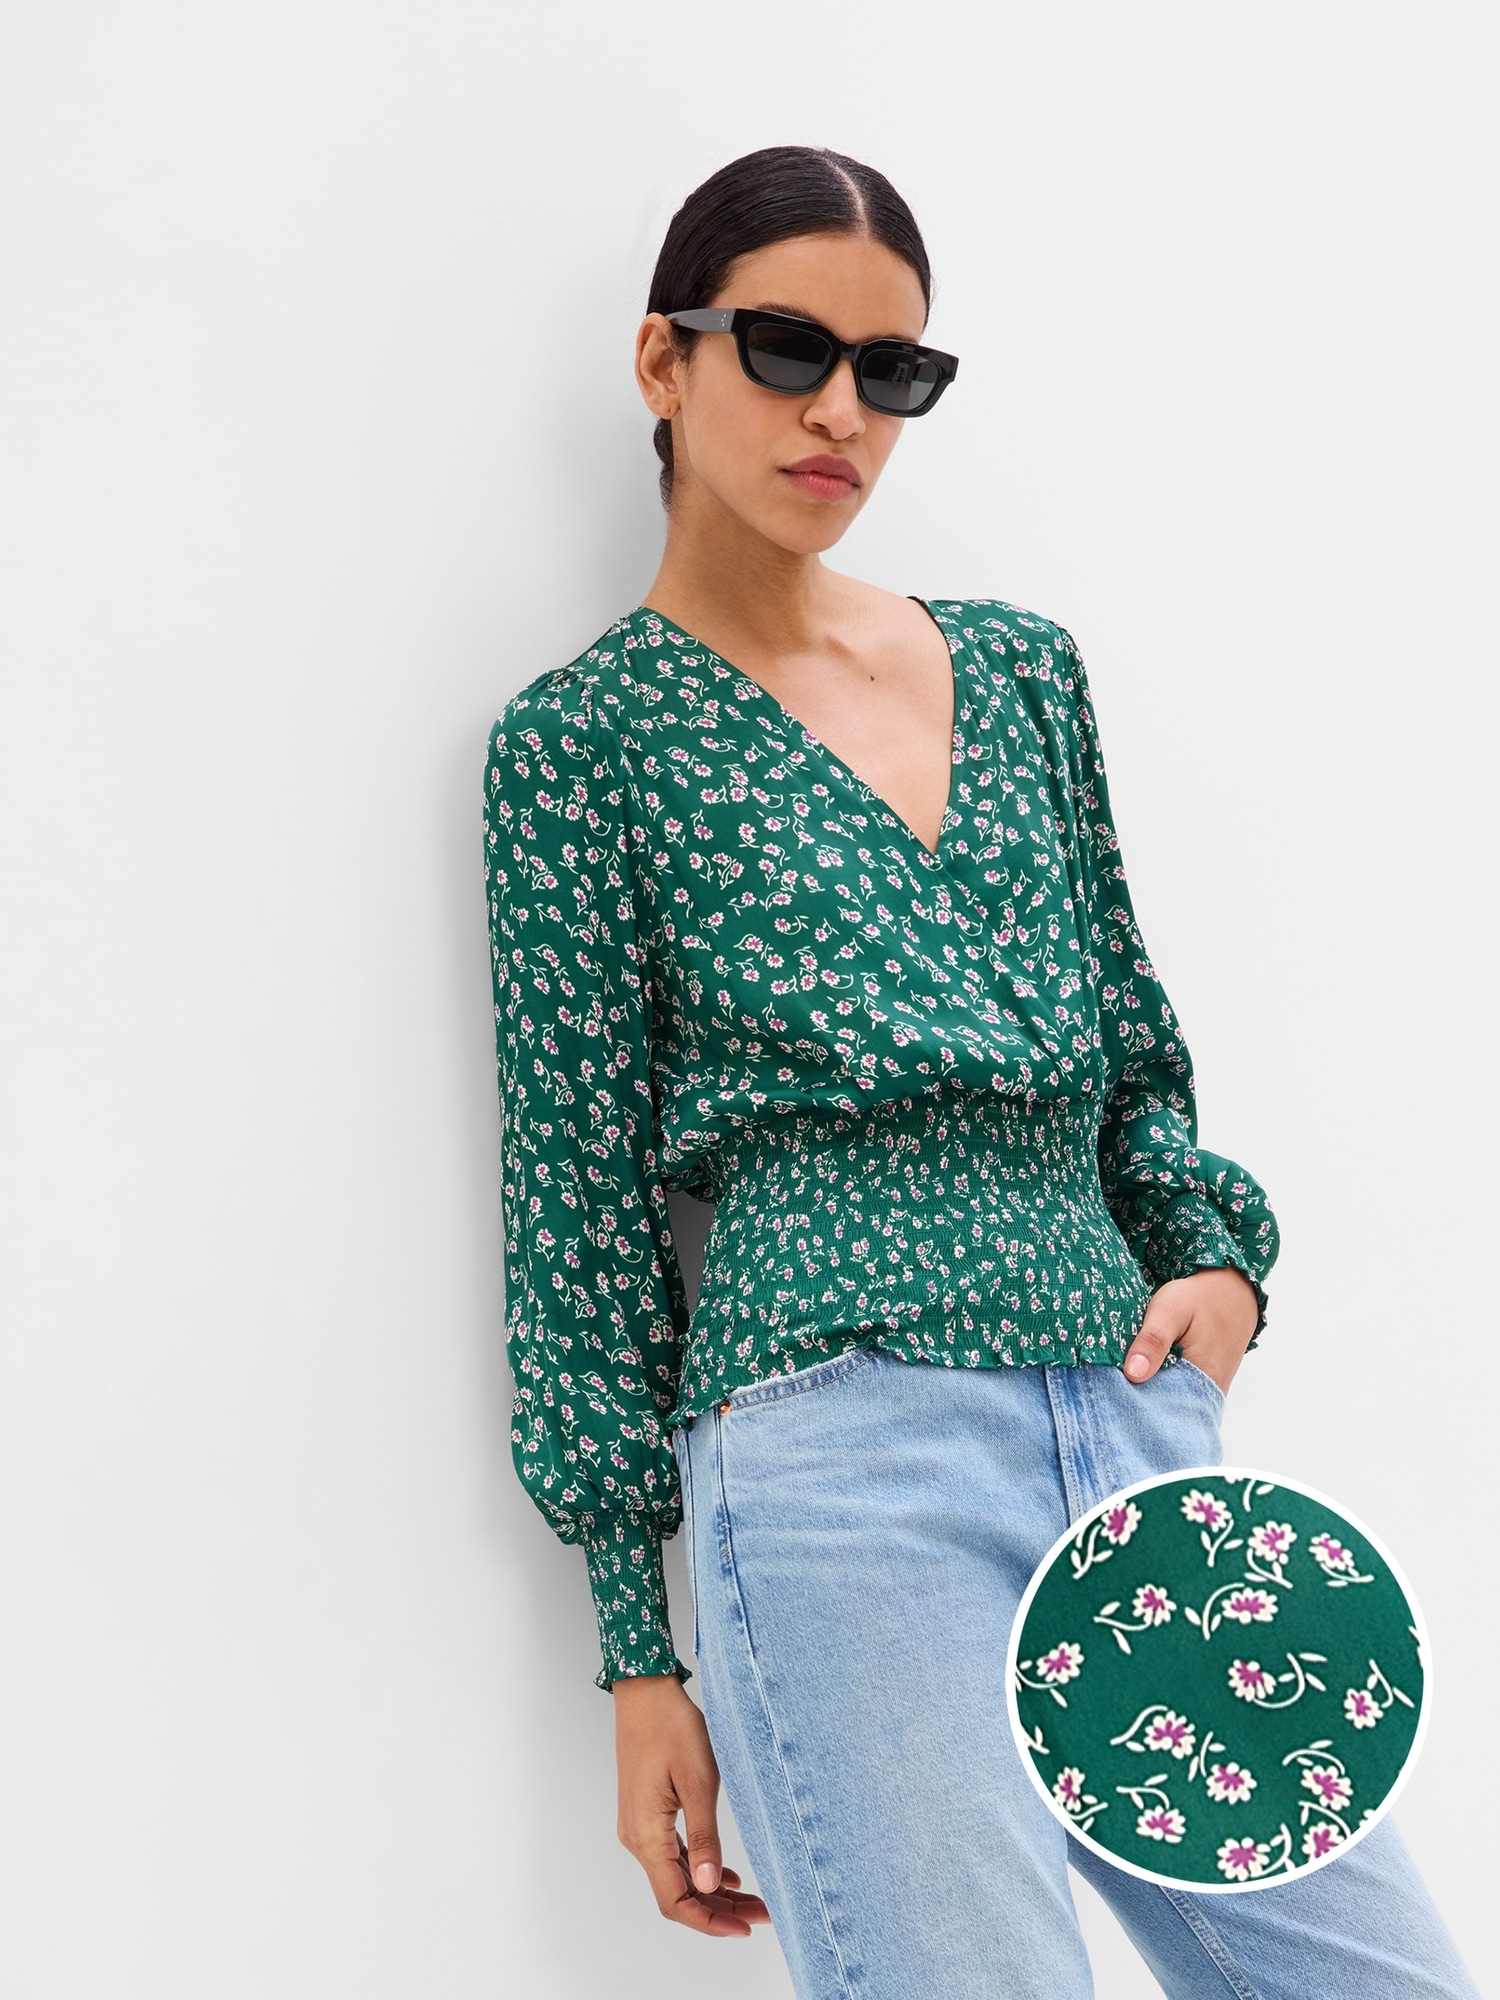 Zara Women's Wrap Top Green/Black Polka Dot XL